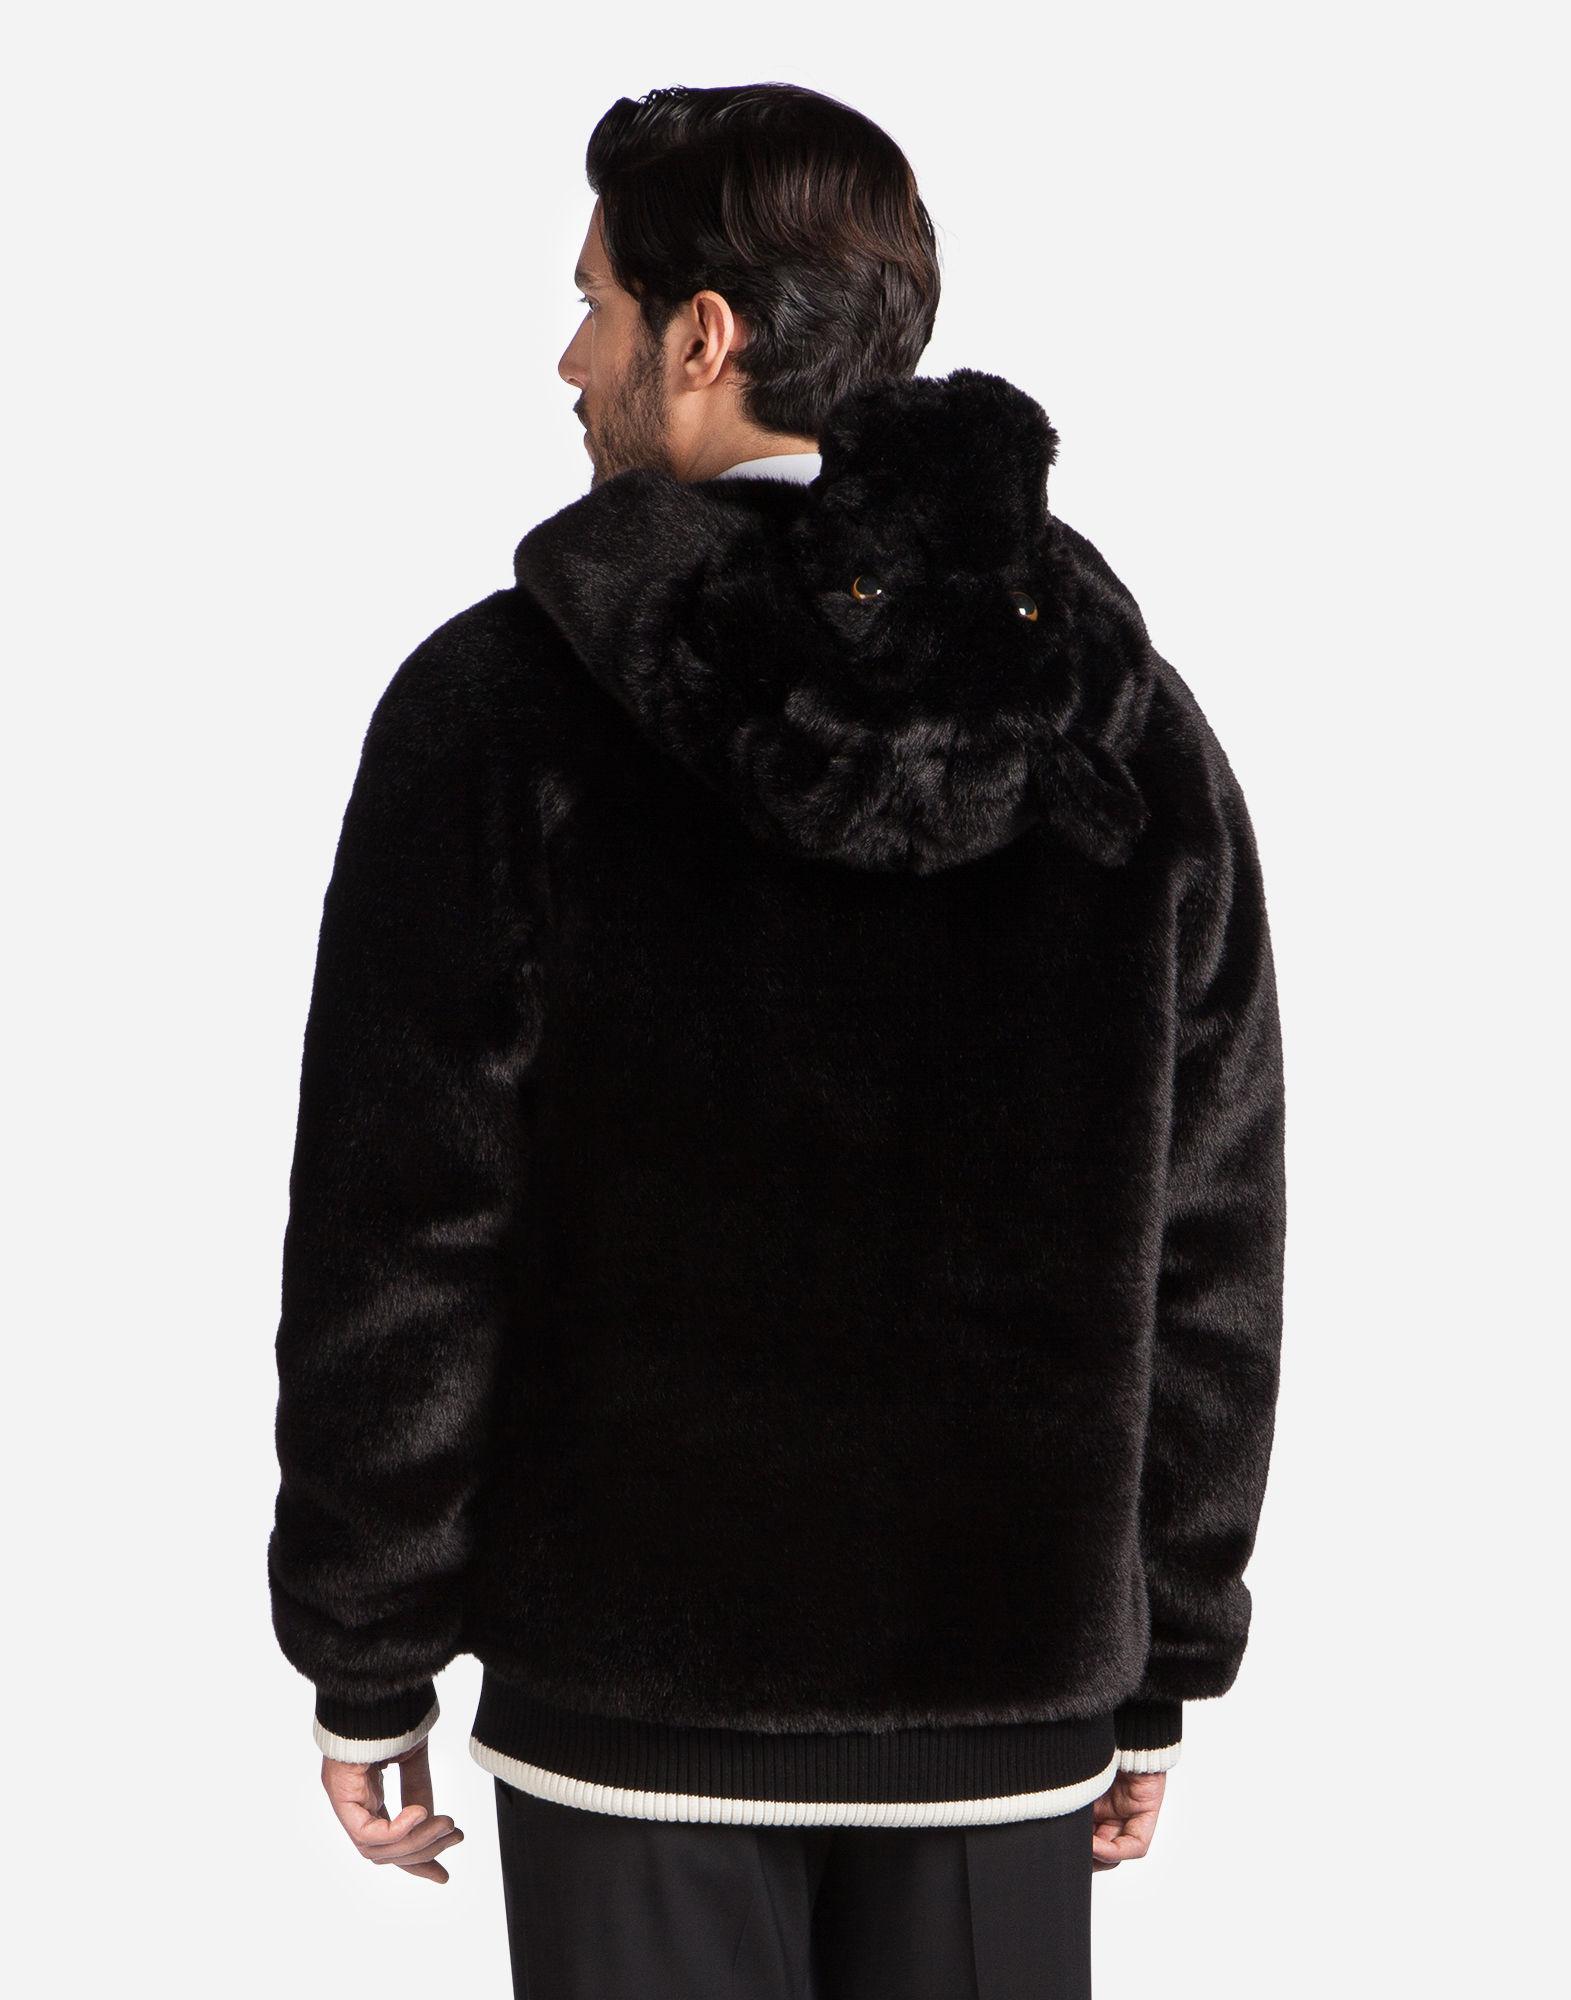 Dolce & Gabbana Bomber Jacket In Eco Fur in Black for Men - Lyst